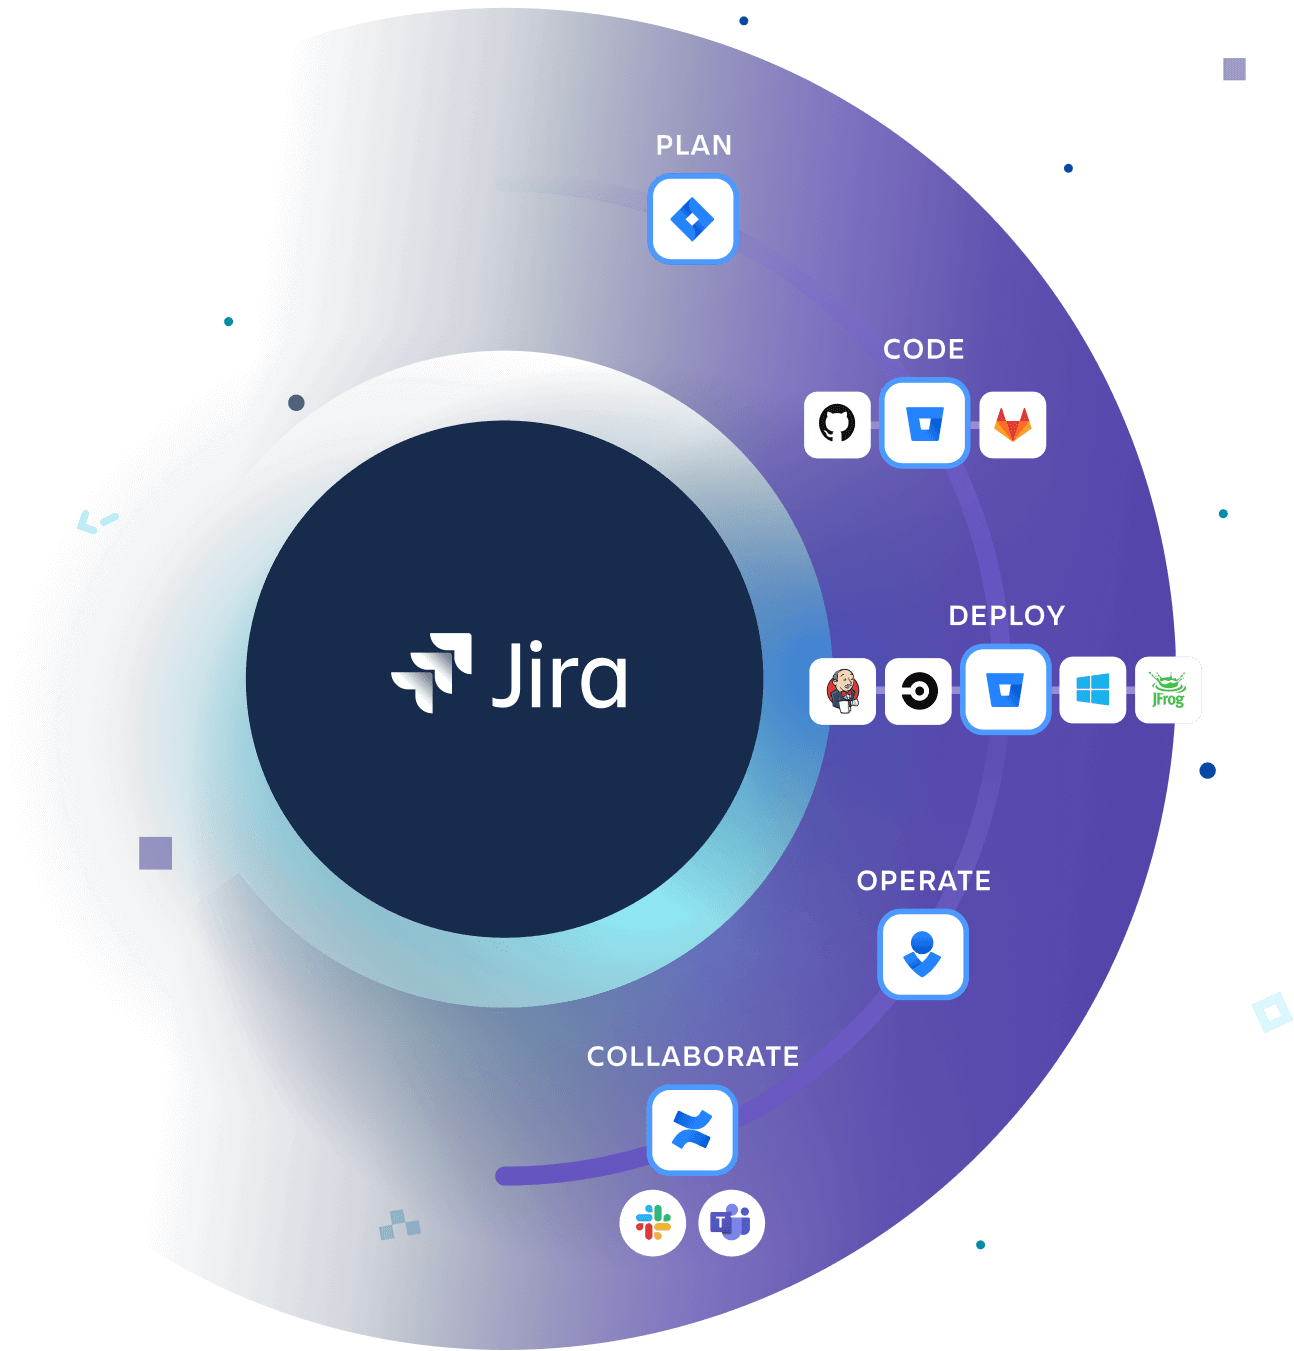 Jira Software DevOps 图示：规划、编码、部署、运营和协作